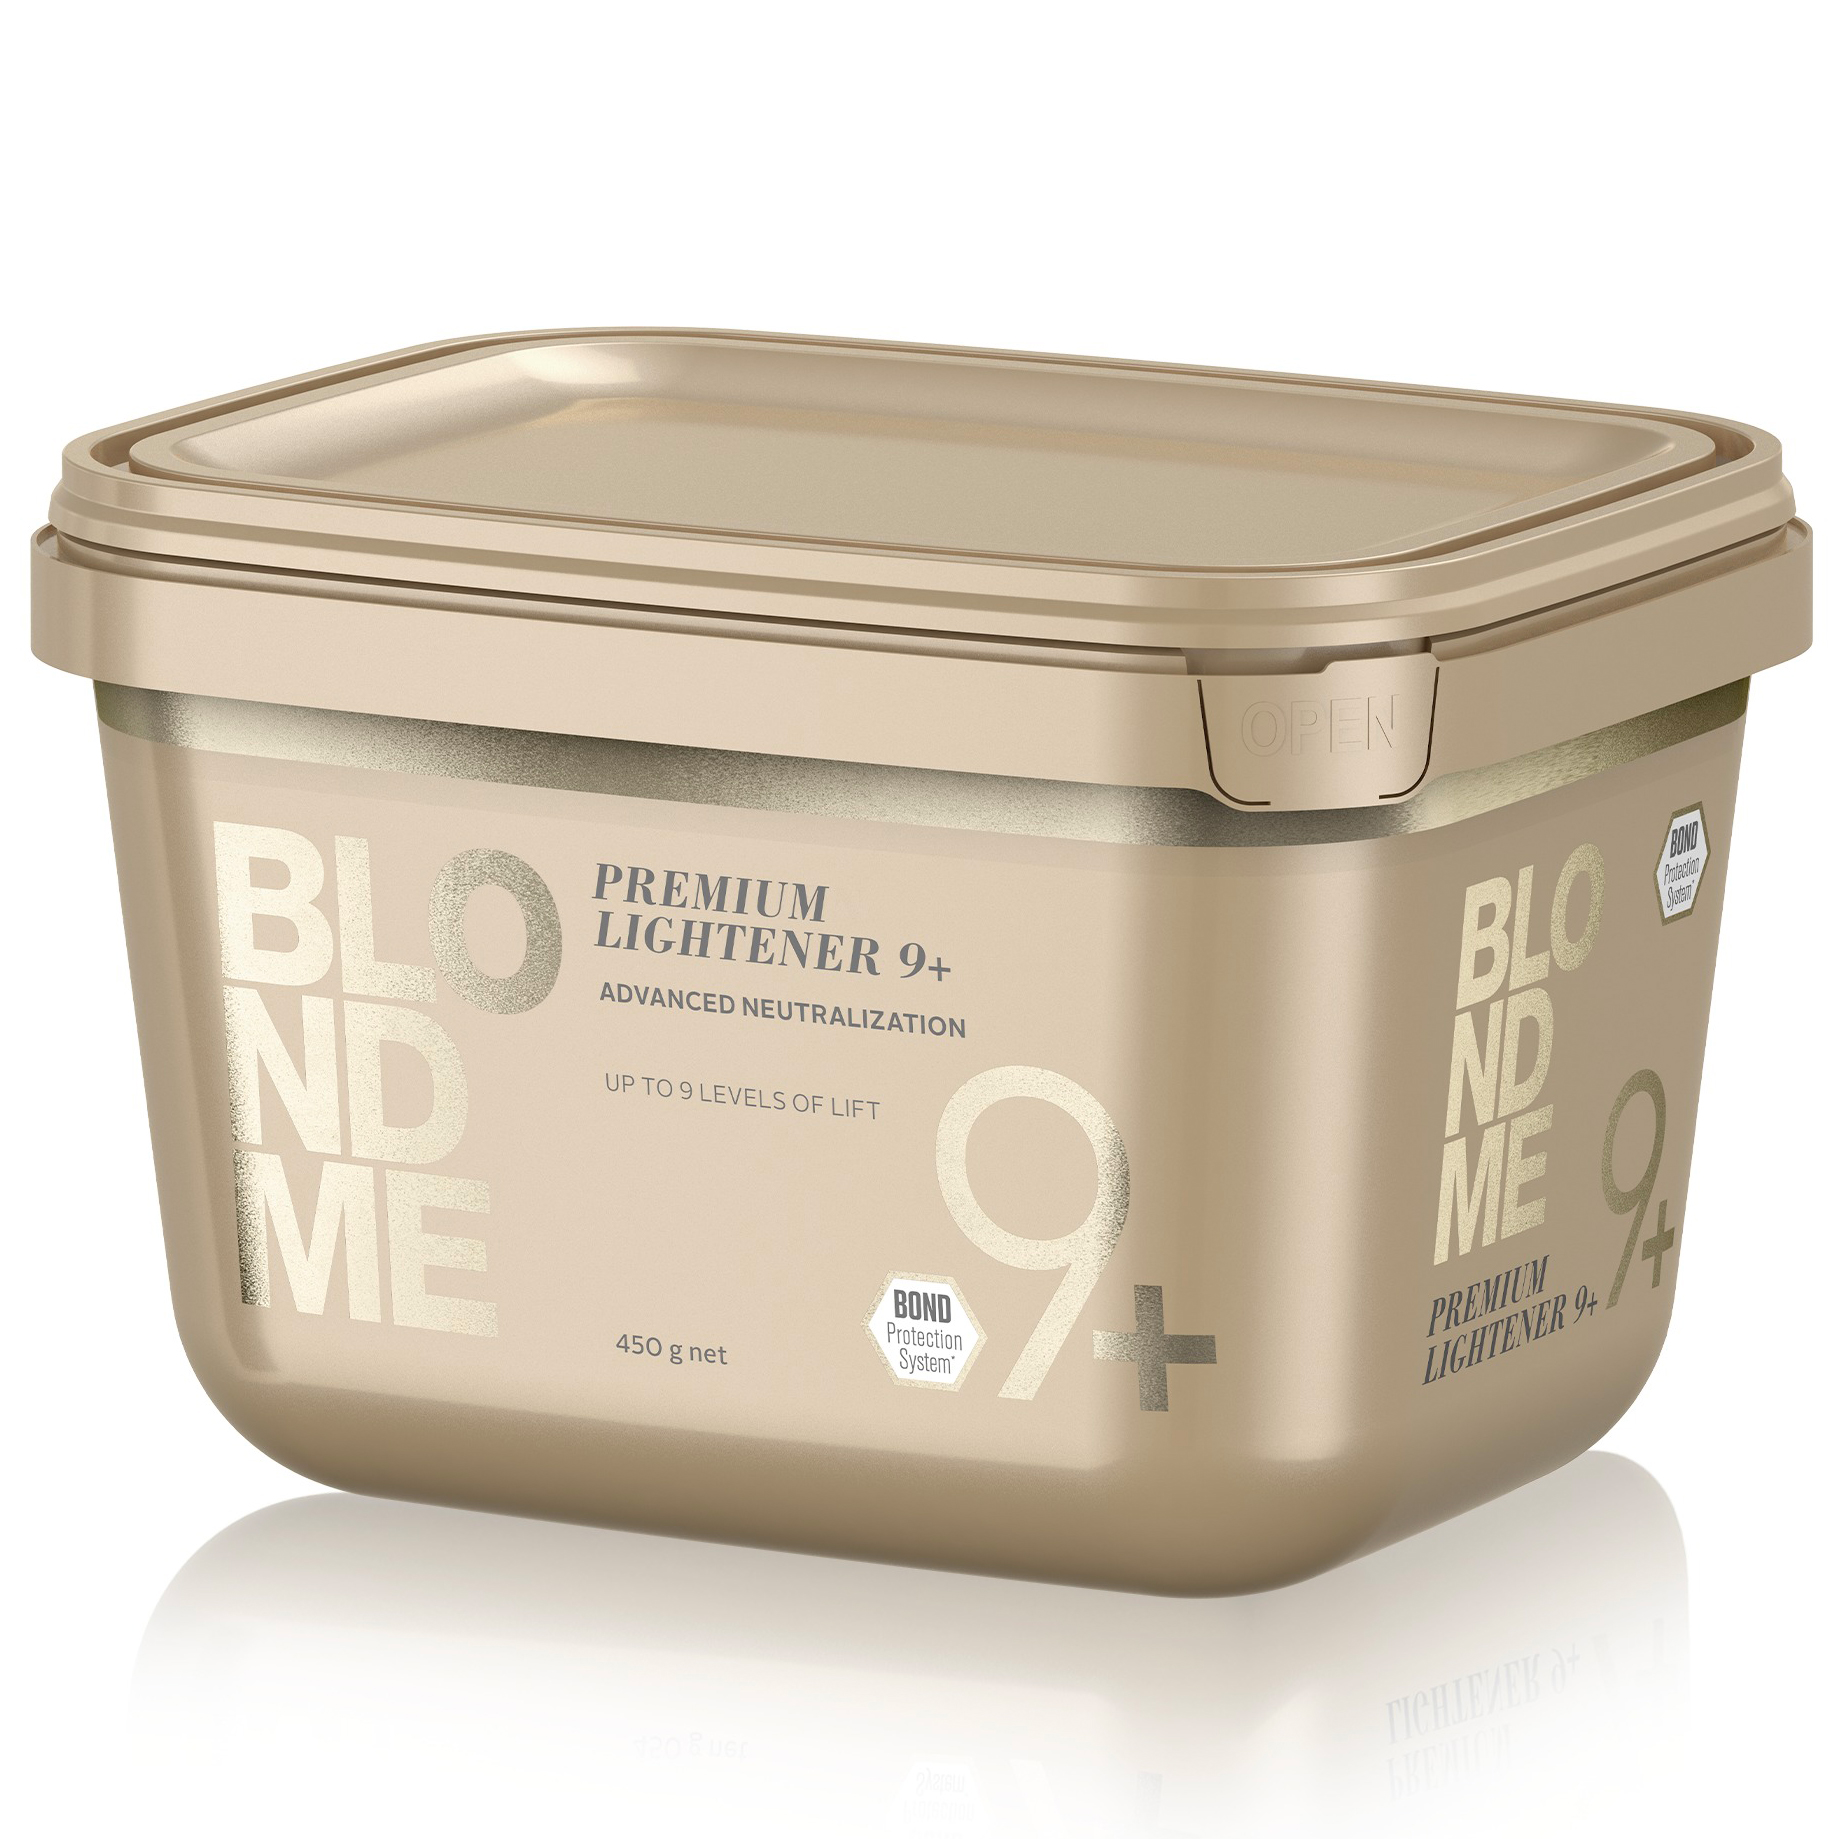 Poudre Dcolorante Blond Me Premium Lightener 9+ Schwarzkopf 450g